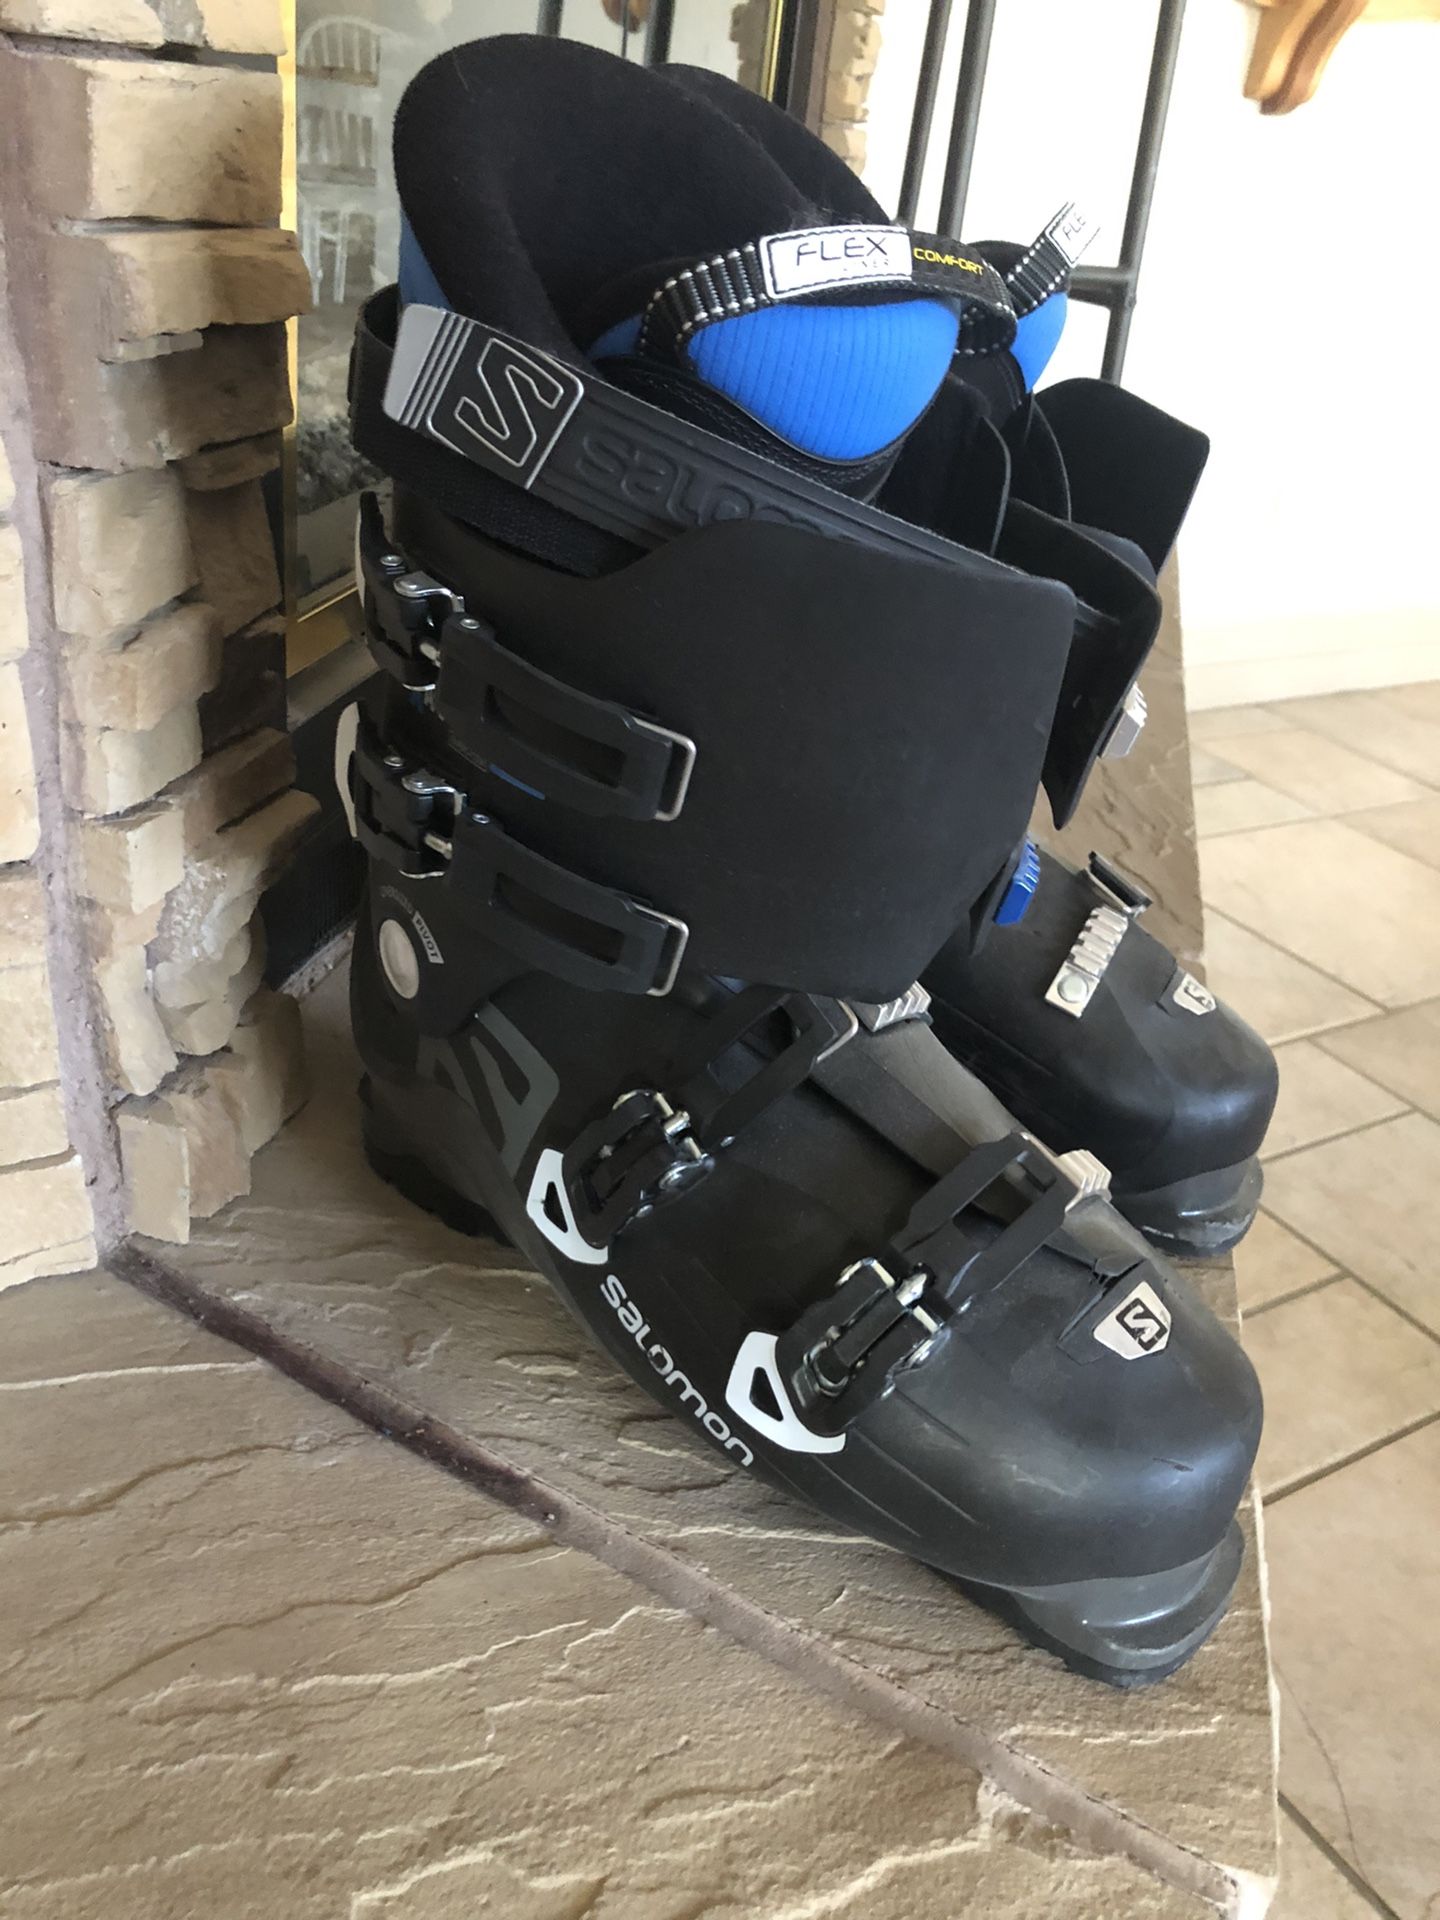 Salomon Access Ski boots